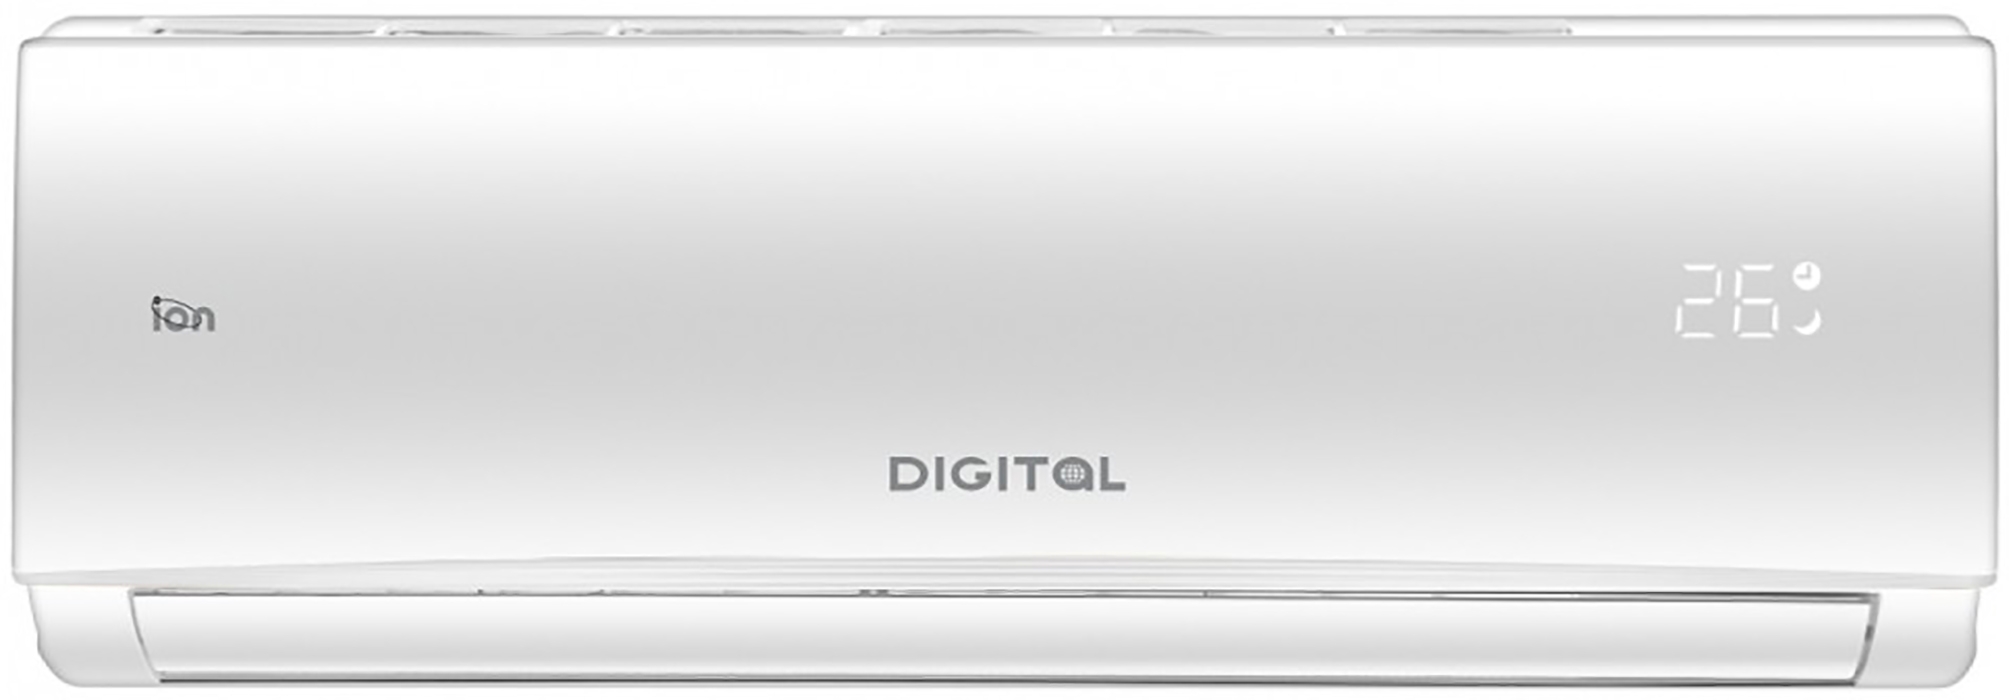 Кондиционер сплит-система Digital DAC-12T6 (Wi-Fi ready) цена 0.00 грн - фотография 2